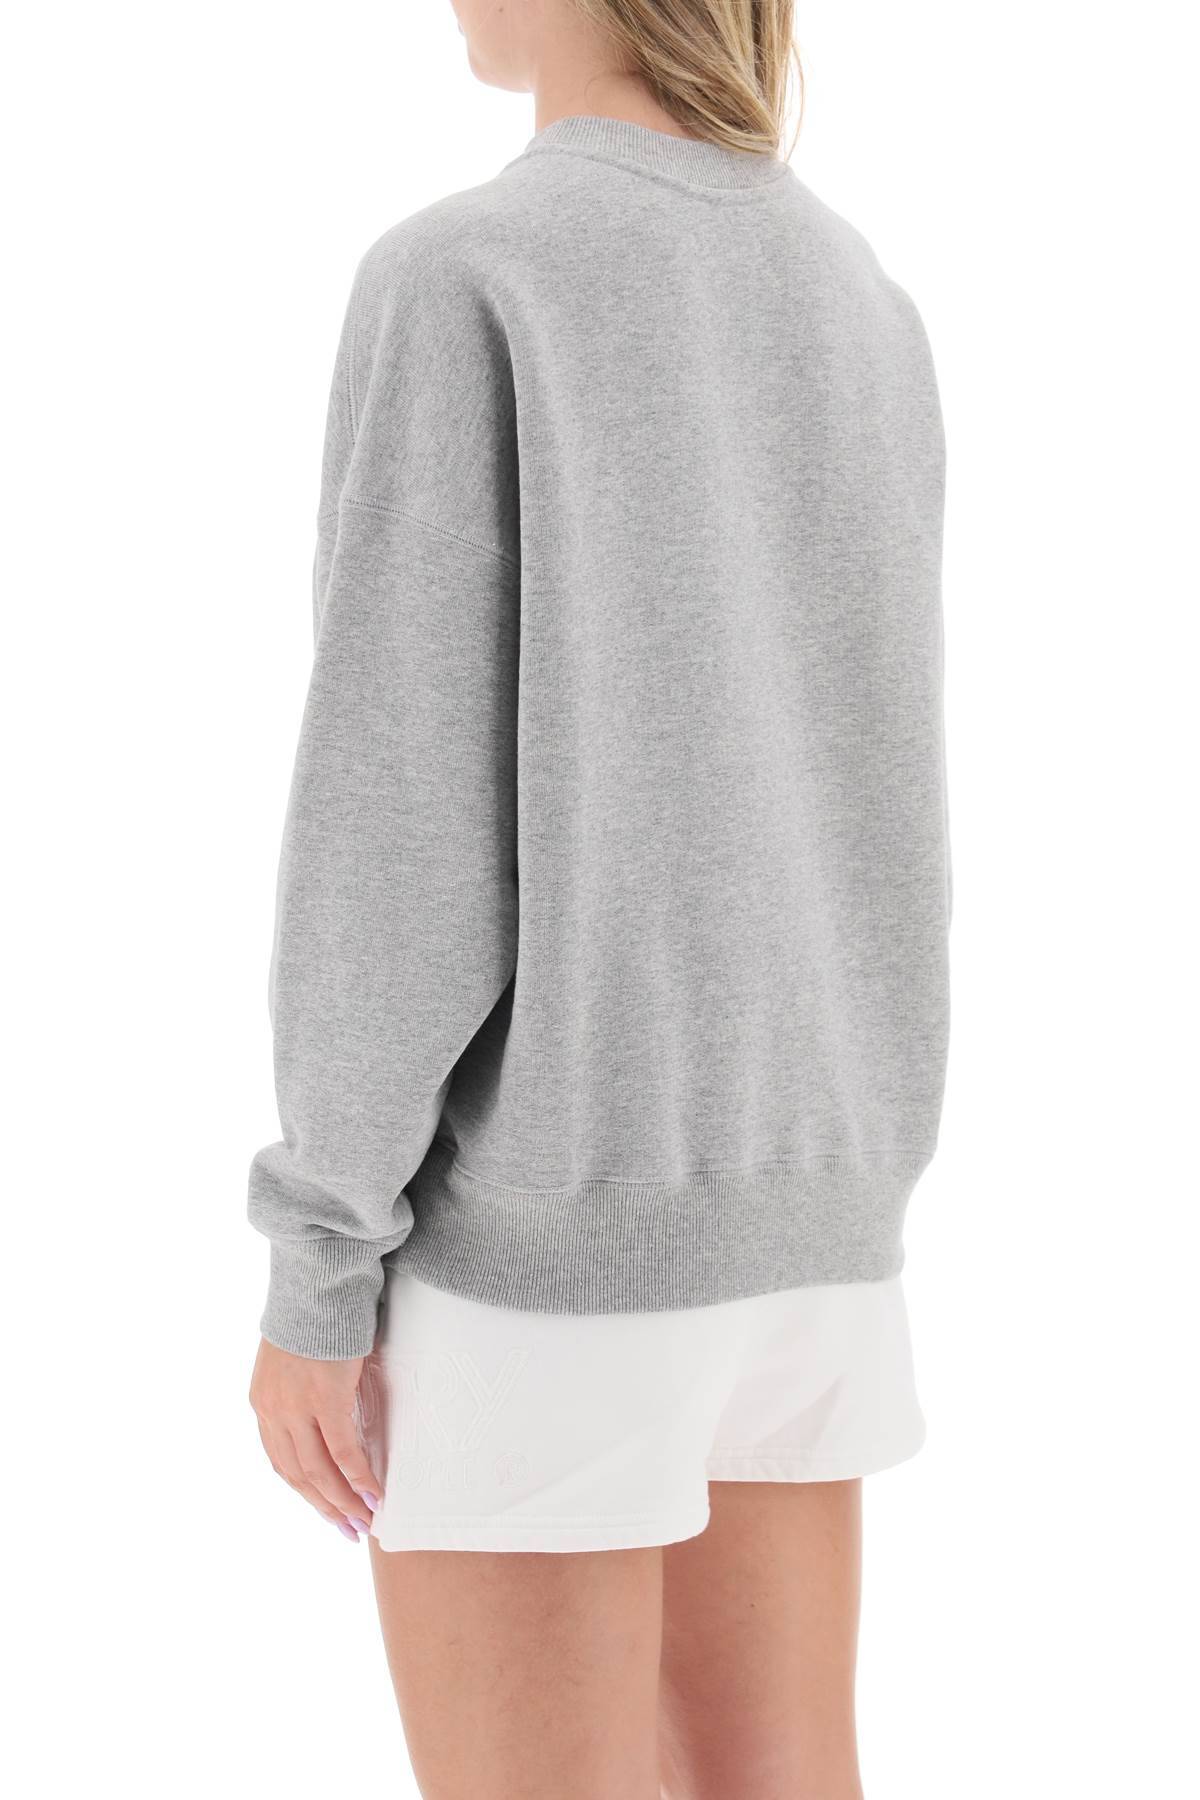 Shop Autry Crew-neck Sweatshirt With Logo Patch In Grey